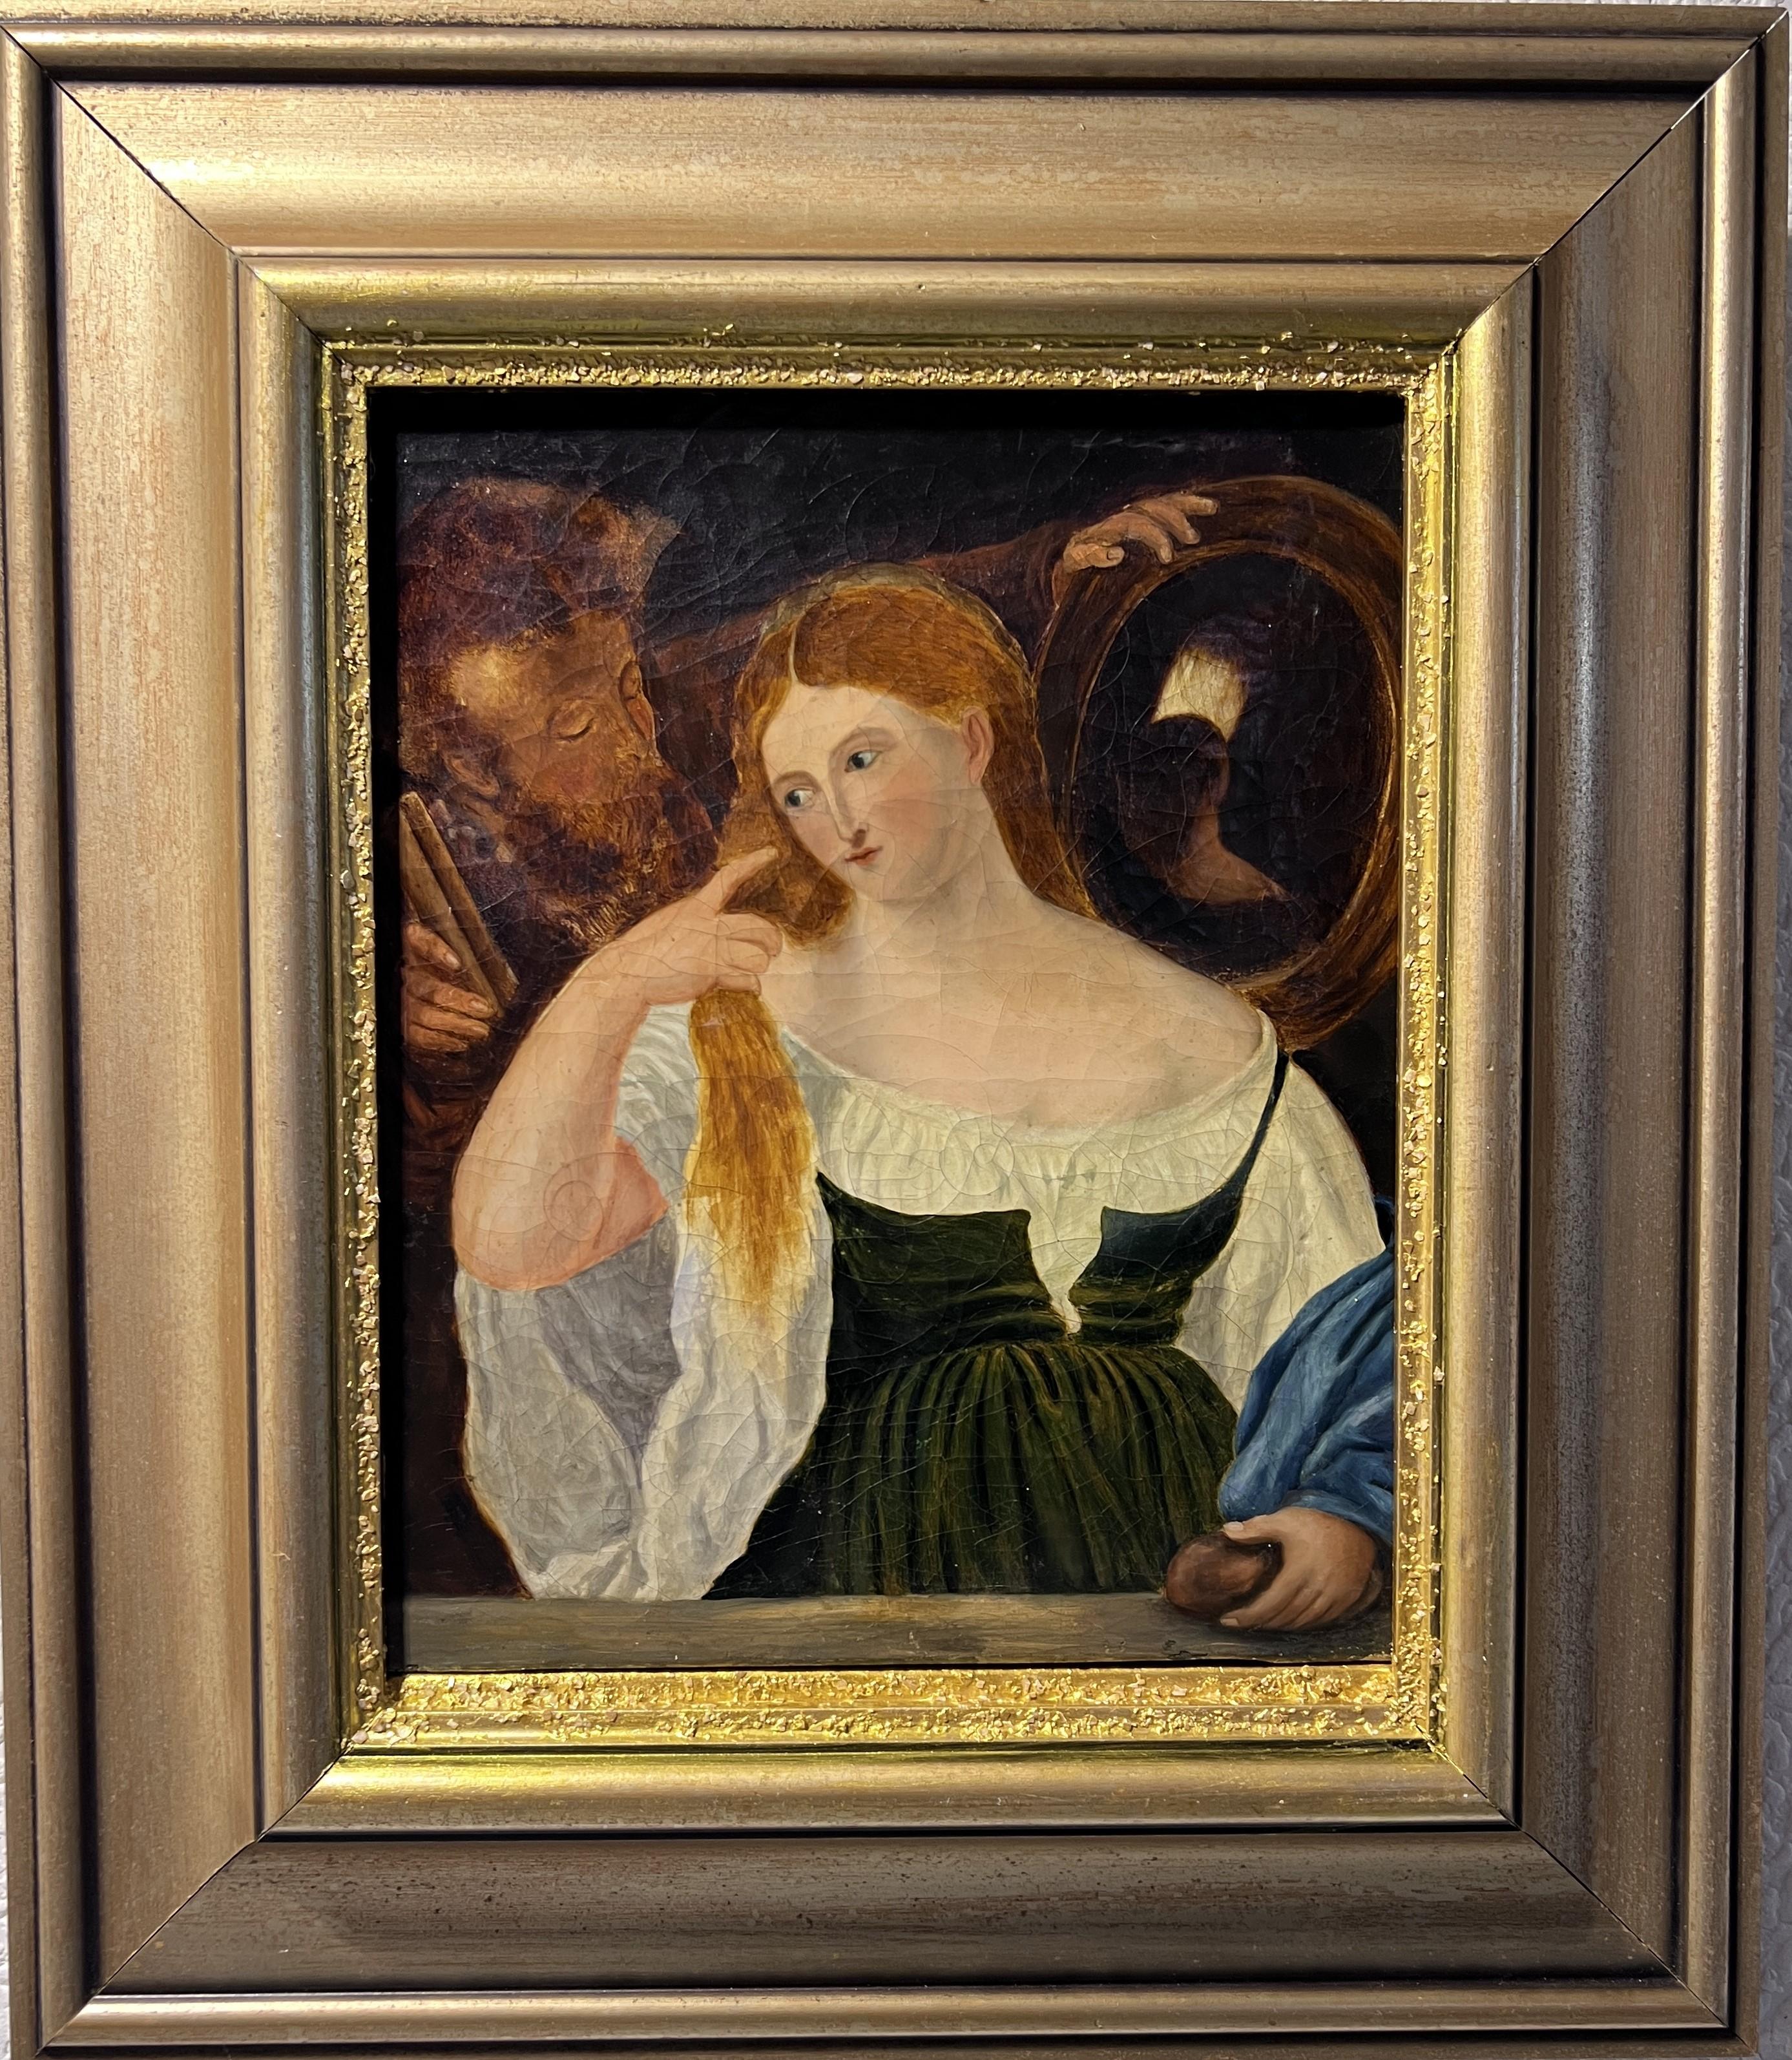 Unknown Portrait Painting - 19 century, Original Antique Oil Painting in canvas, Female Portrait